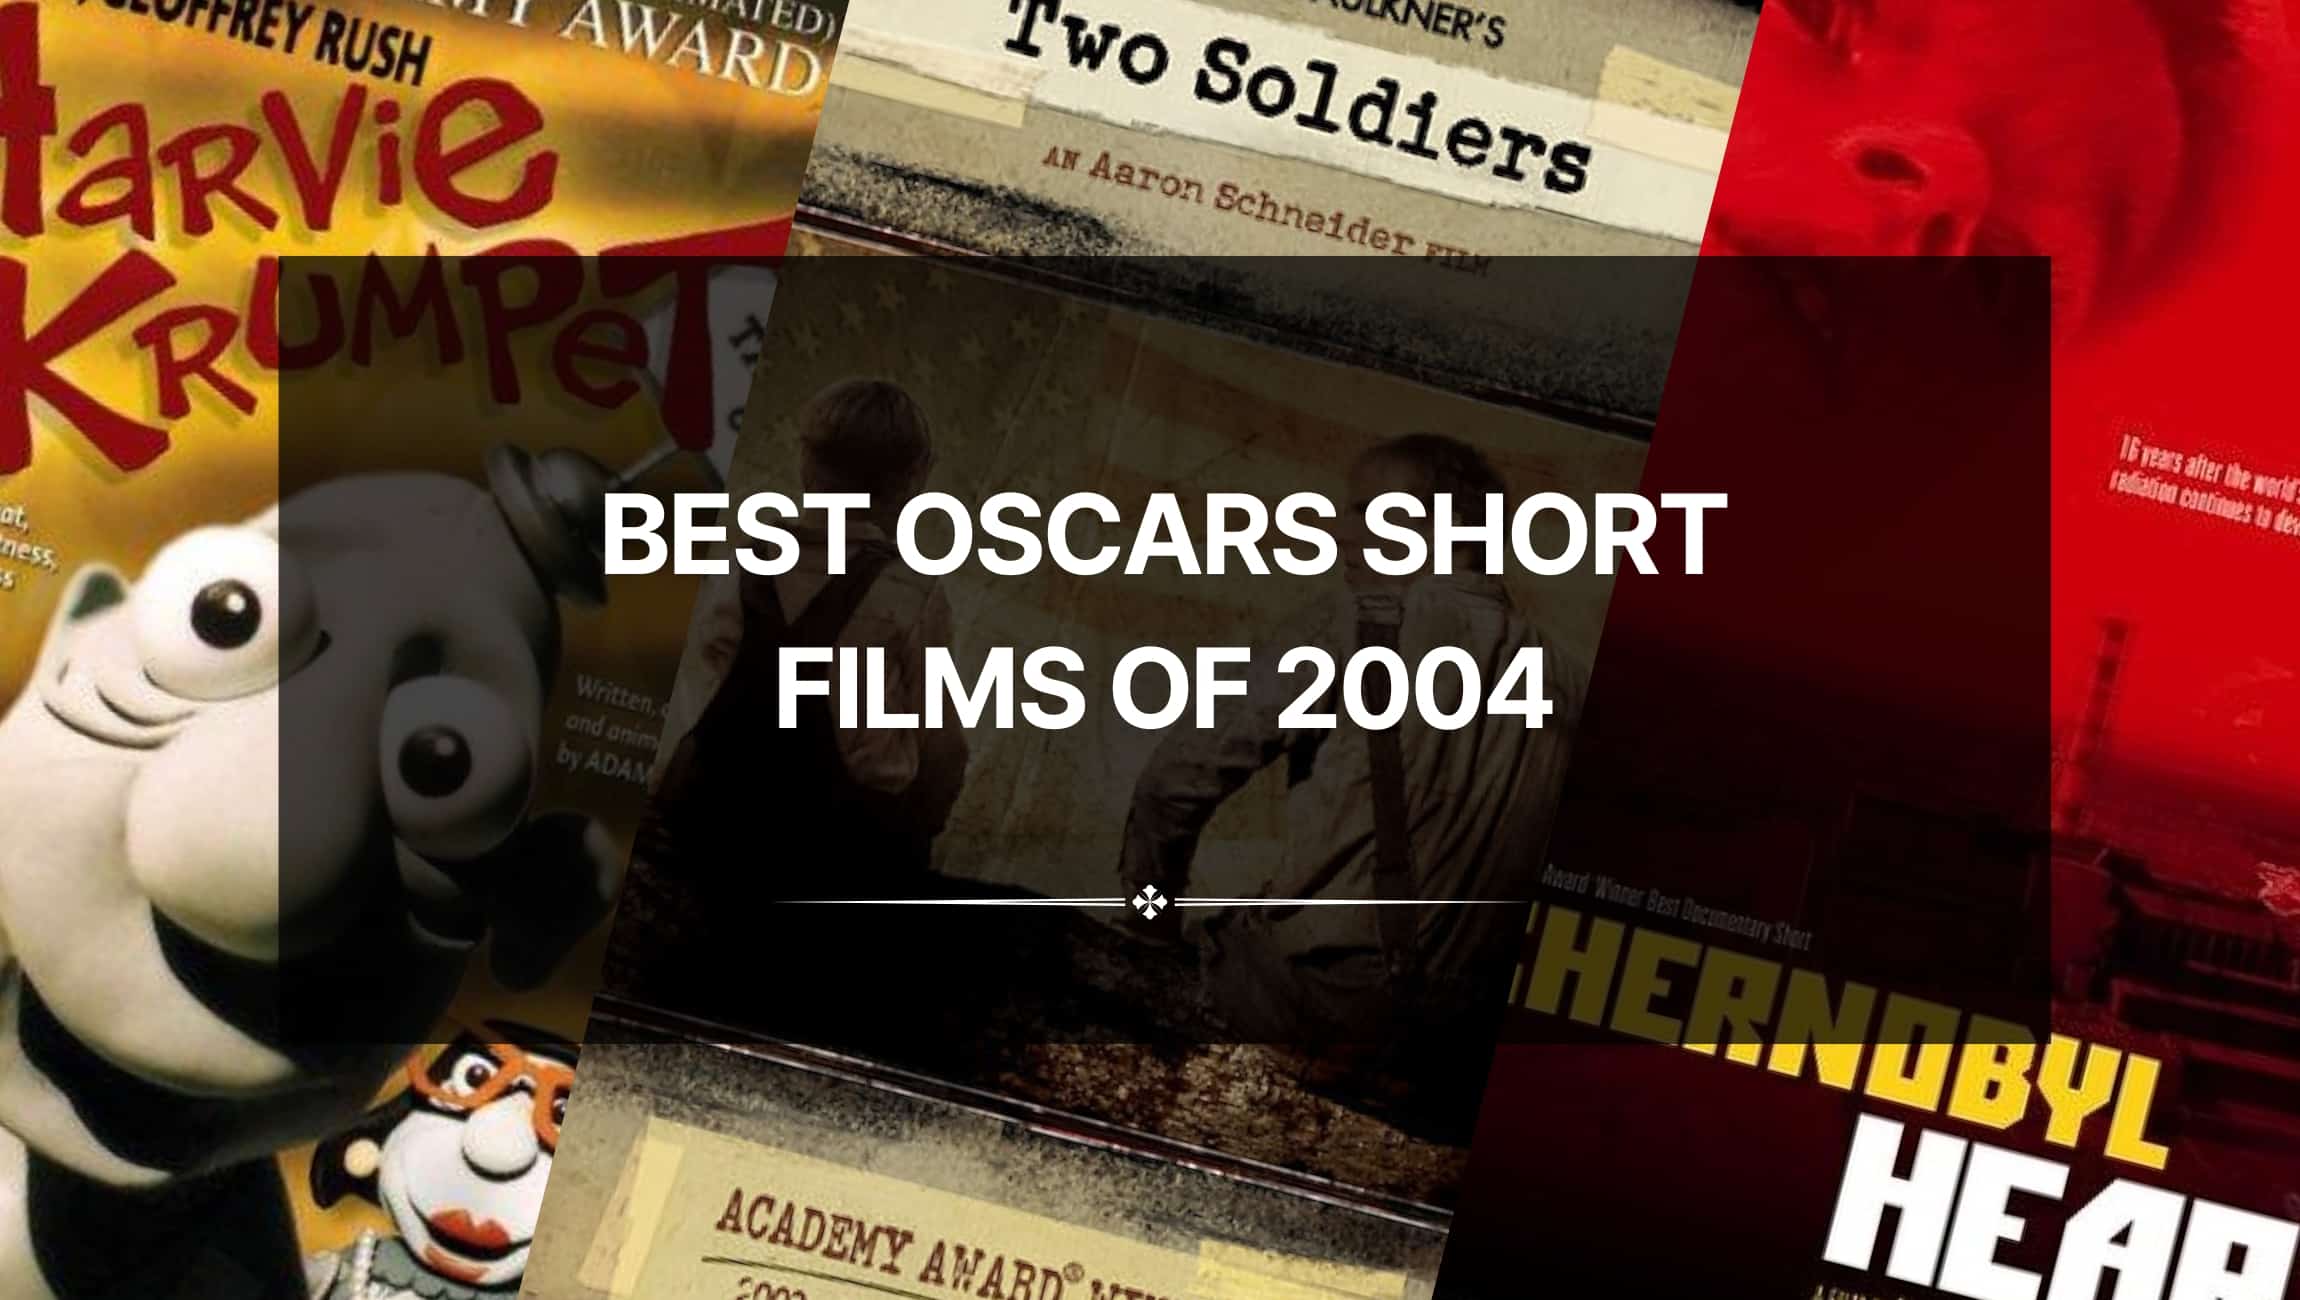 Best Oscars Short Films of 2004